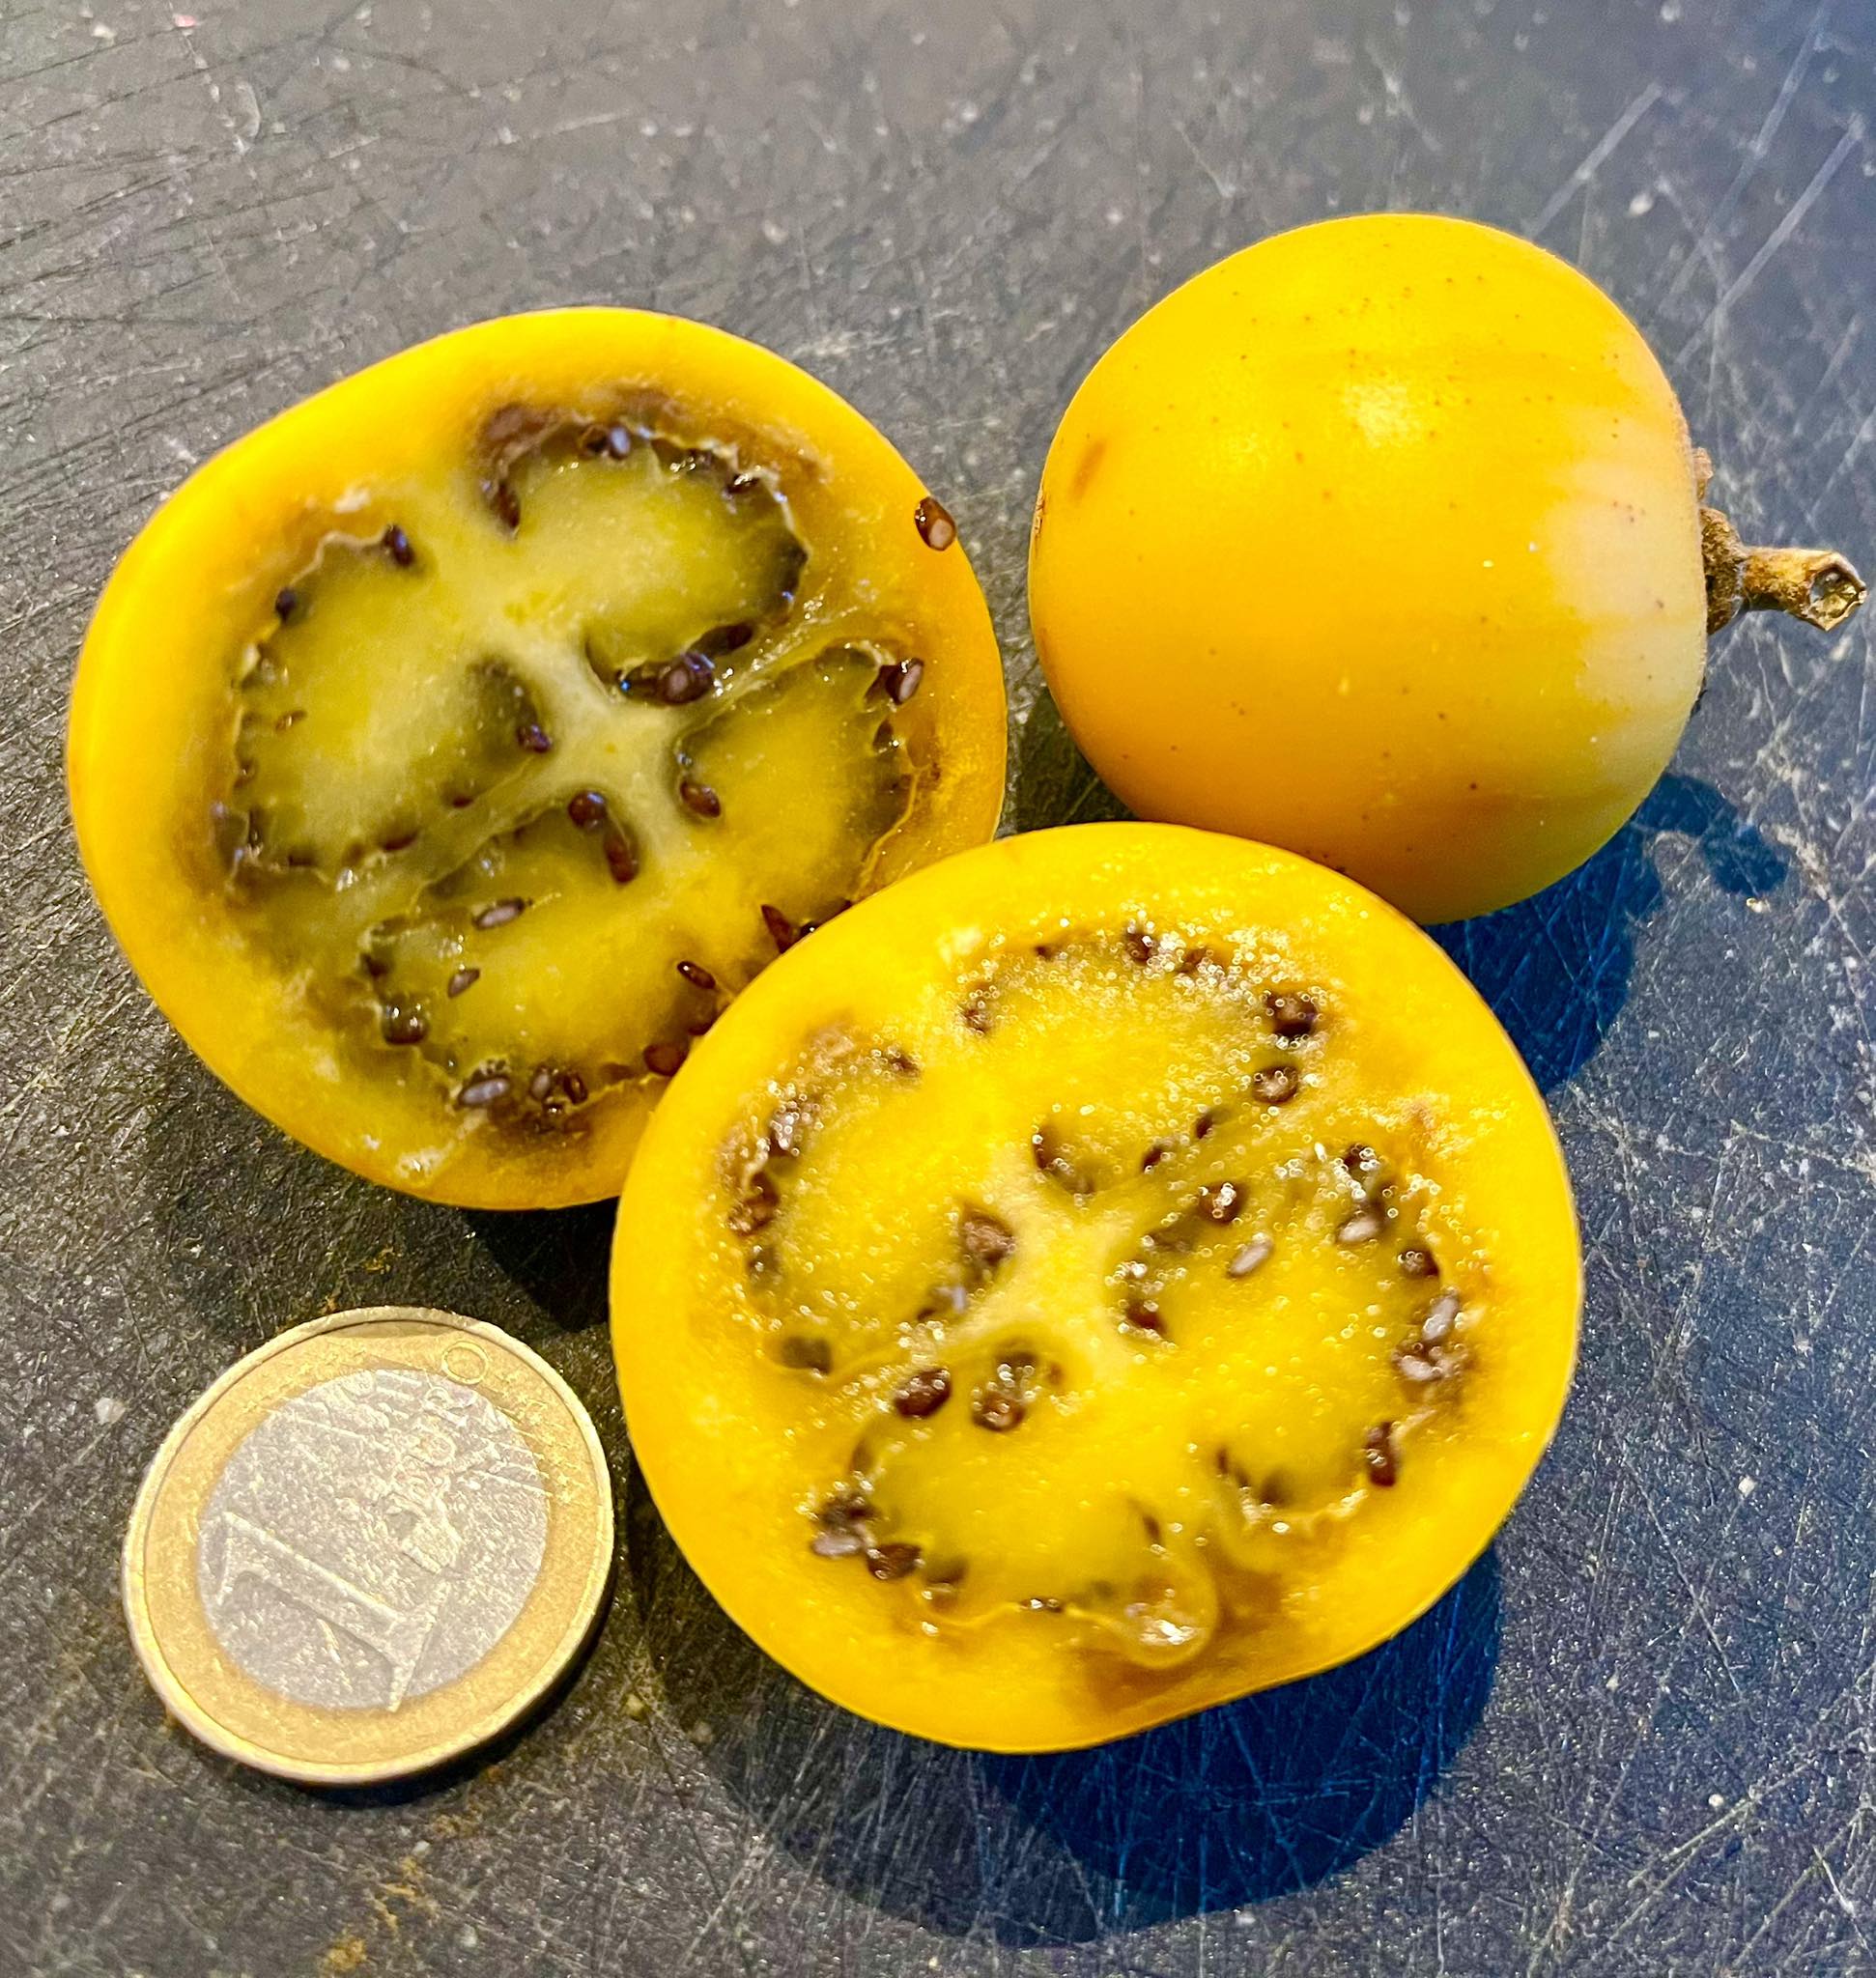 Juã-Açu - Solanum oocarpum - 1 fresh seed / 1 frischer Samen